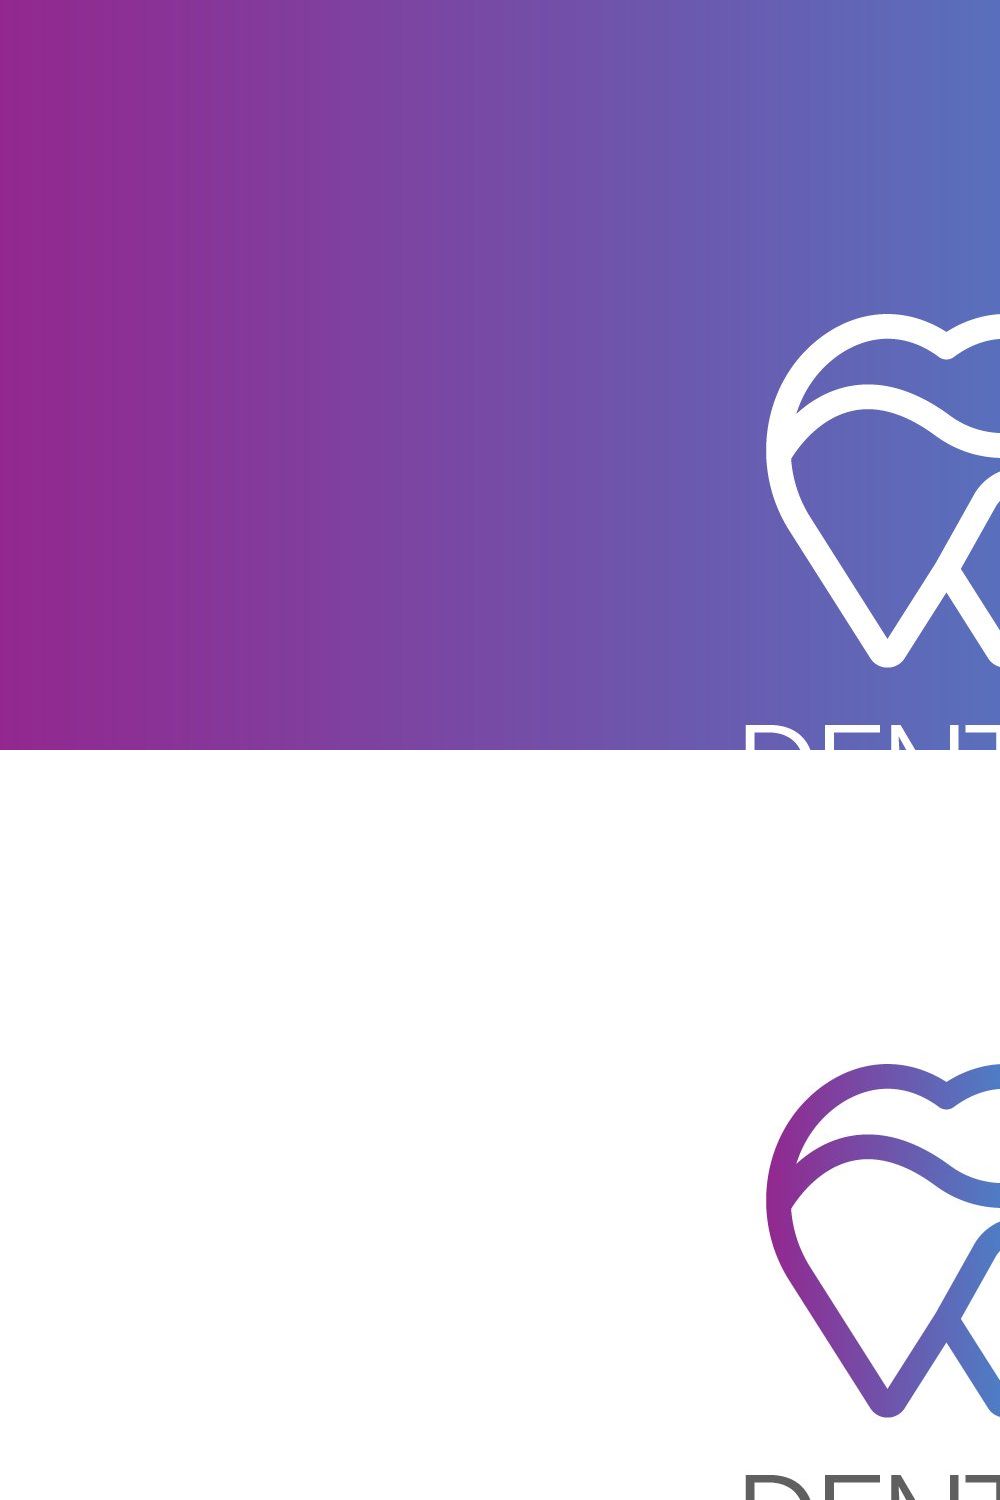 Dental logo pinterest preview image.